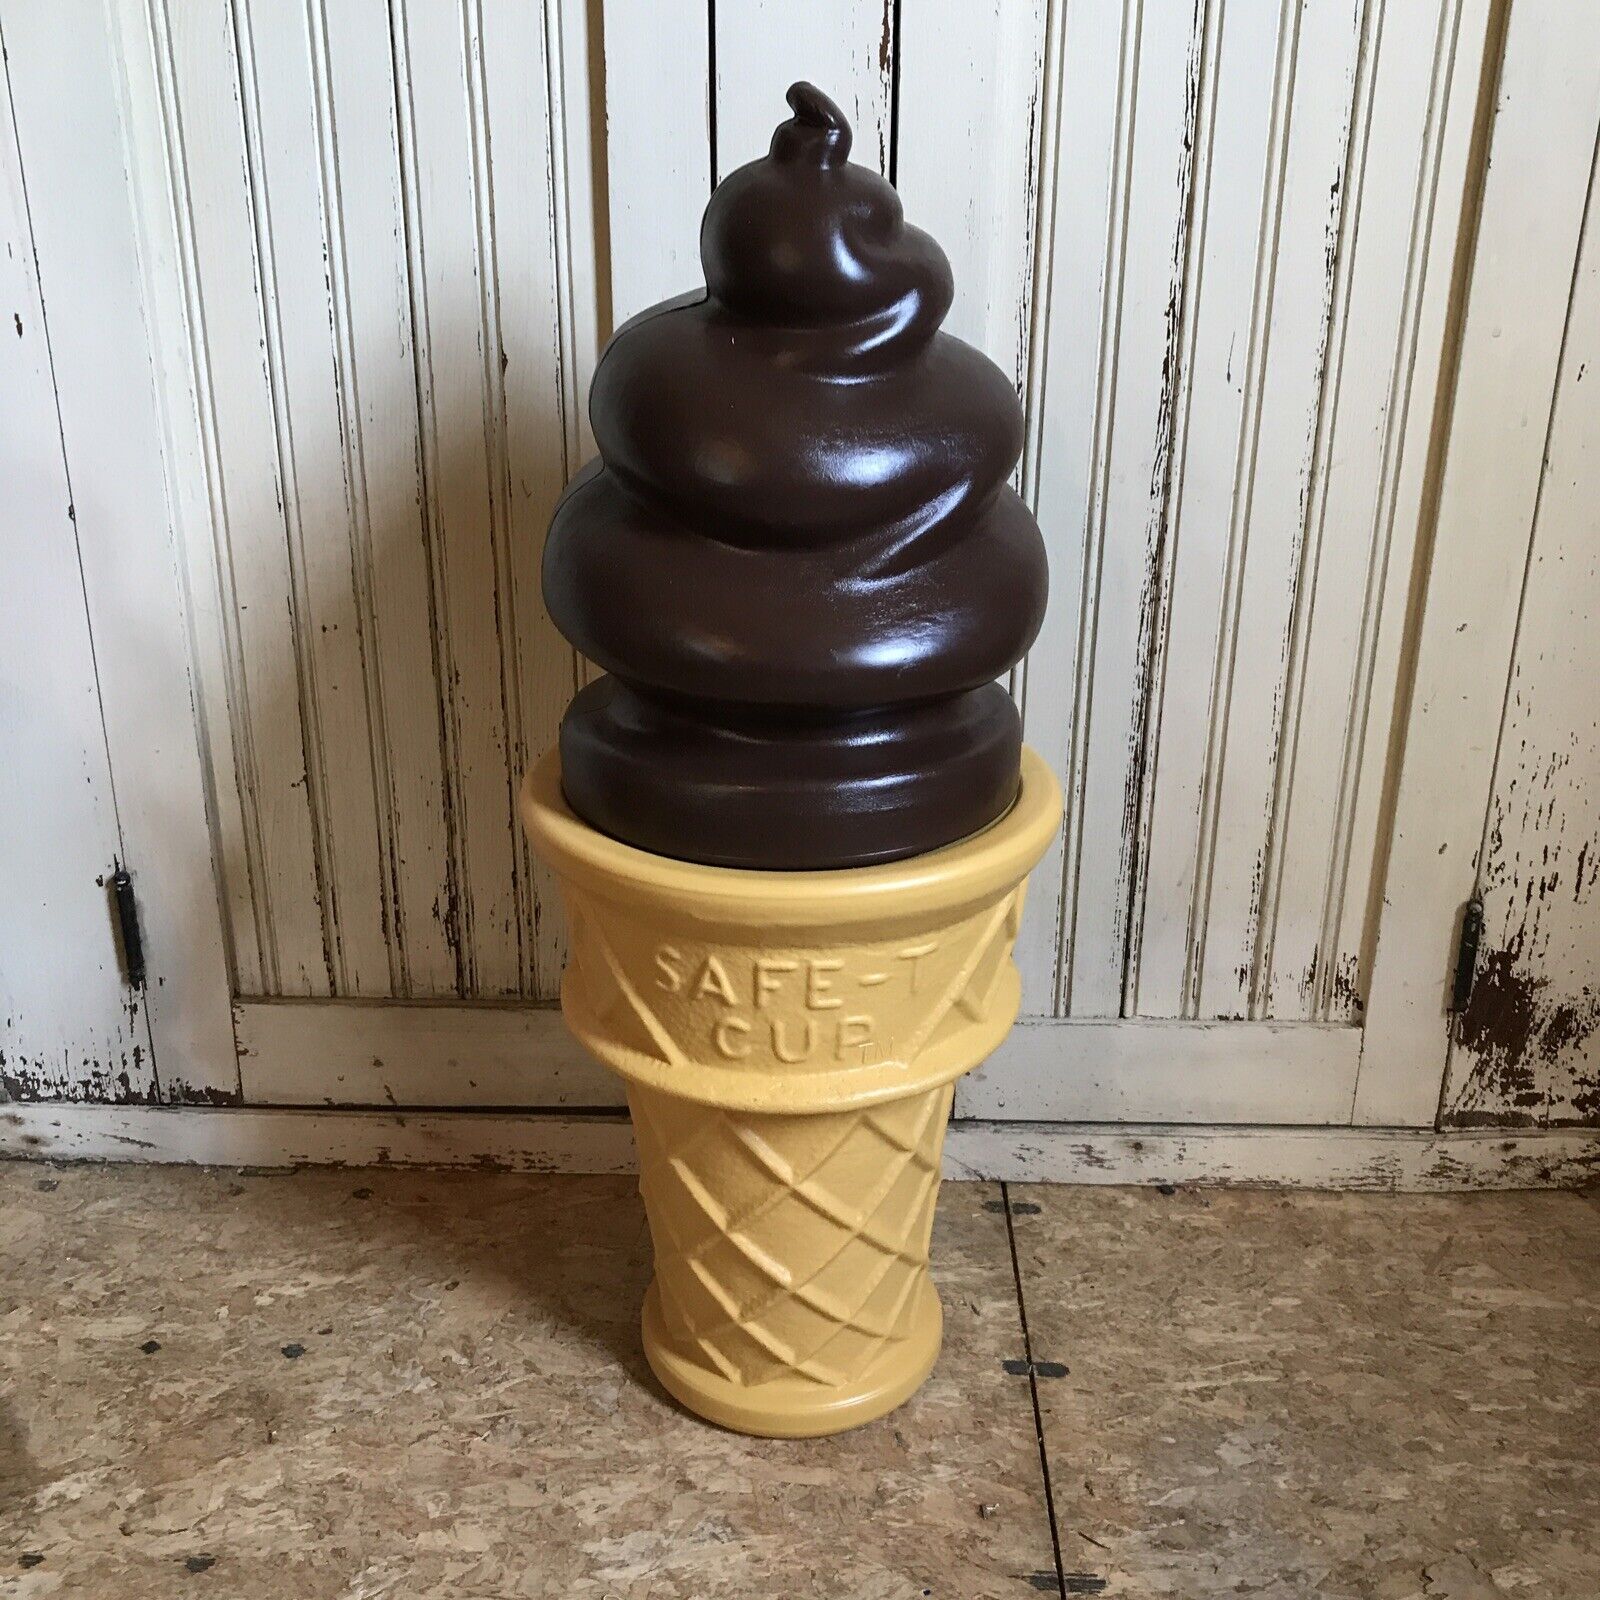 Blow Mold Giant Plastic Ice Cream Cone Chocolate Swirl Safe T Cup Fantasia